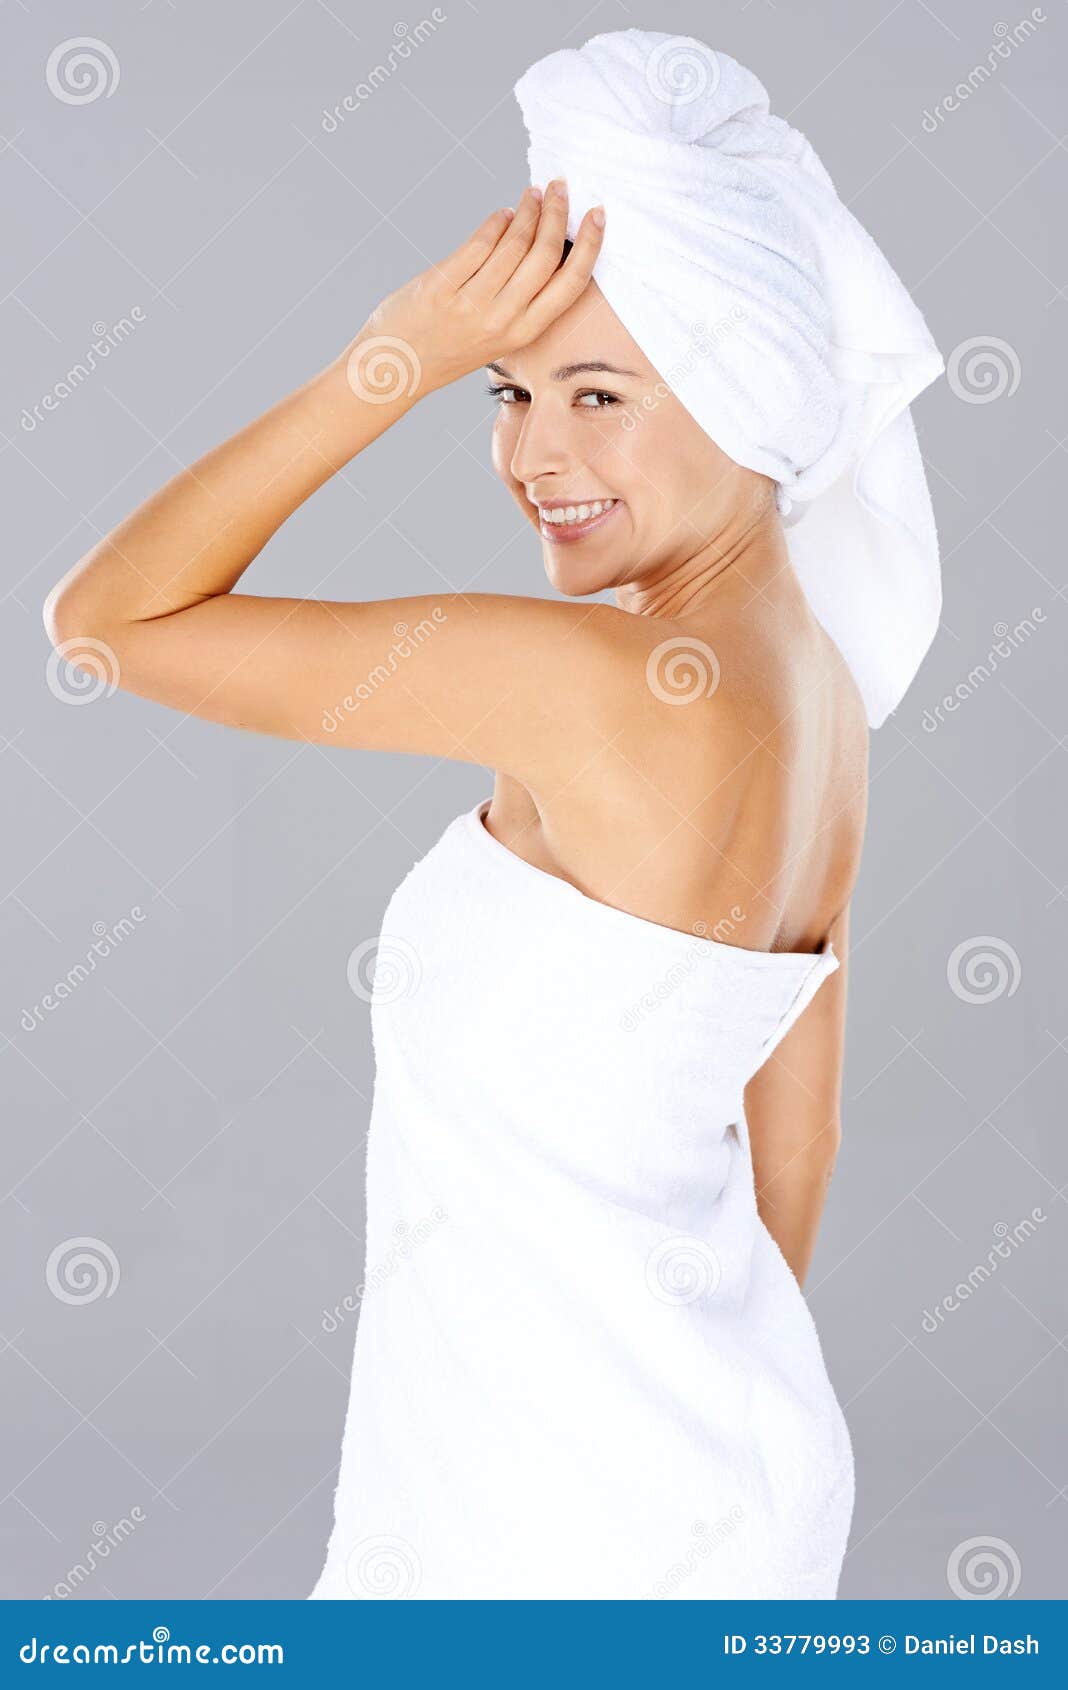 Работа в полотенце. Девушка обернутая в полотенце. Девушка завернутая в полотенце. Полотенце для девочек. Девушка замотанная в полотенце.